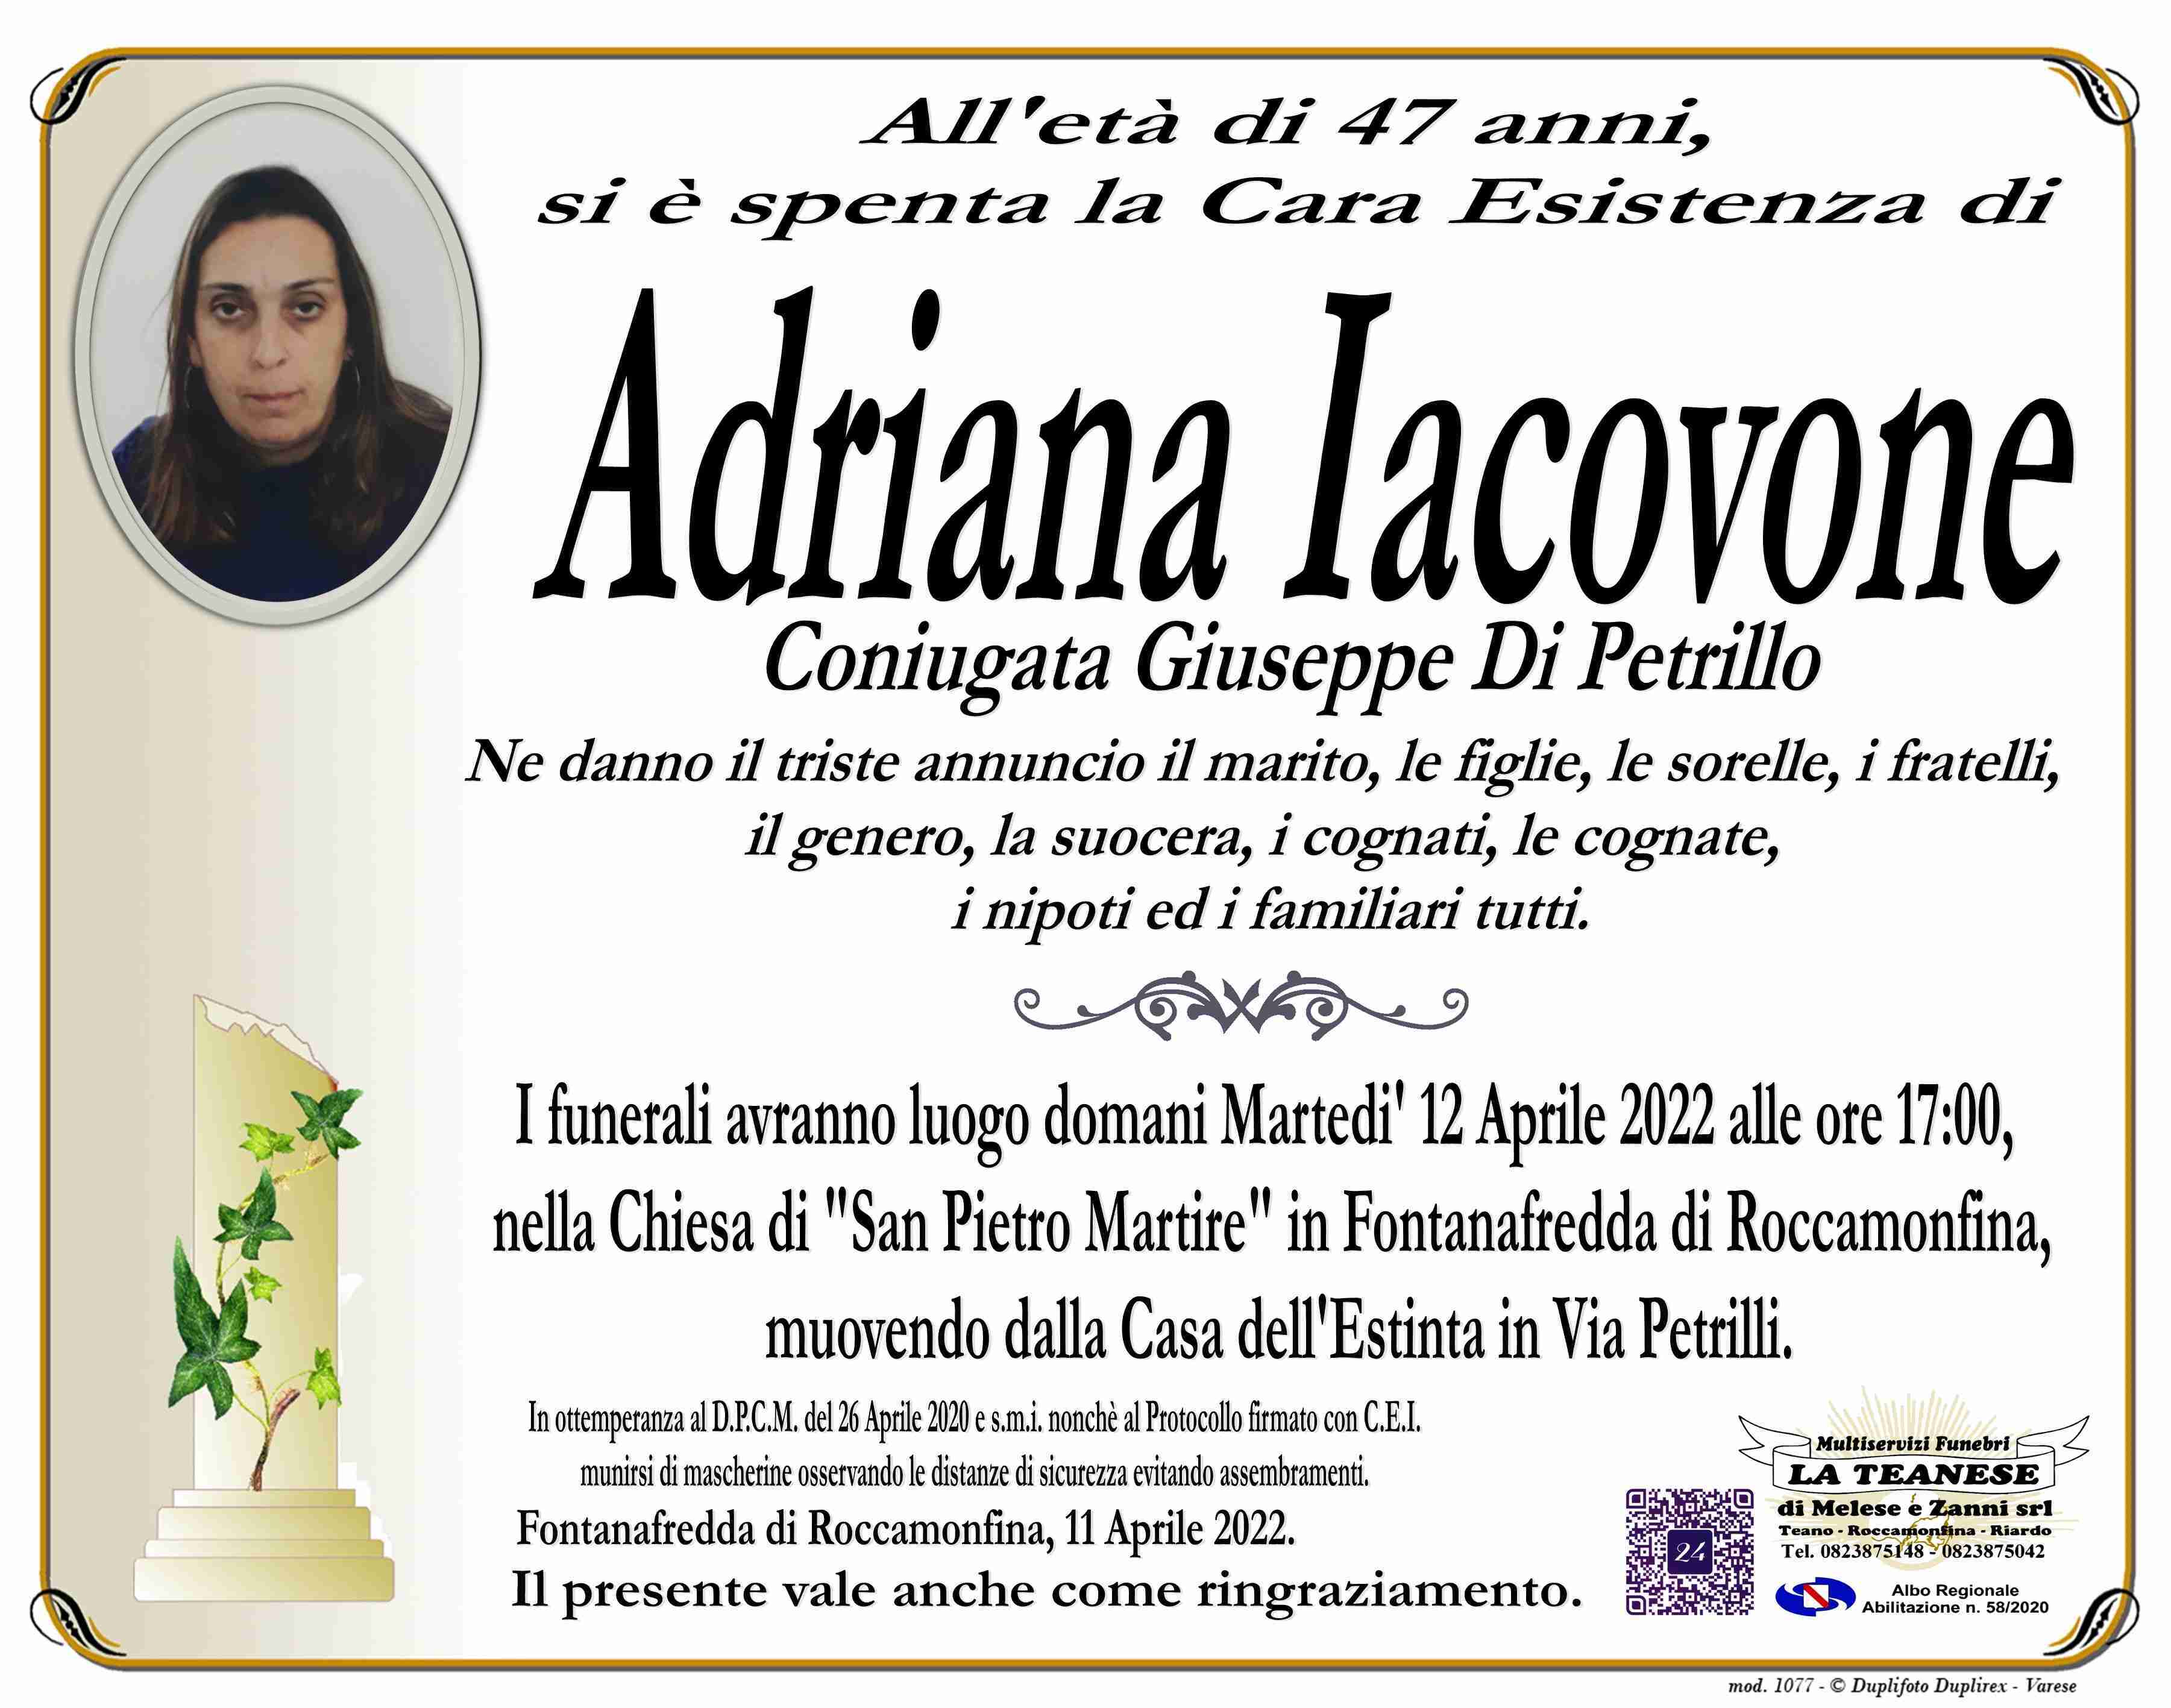 Adriana Iacovone